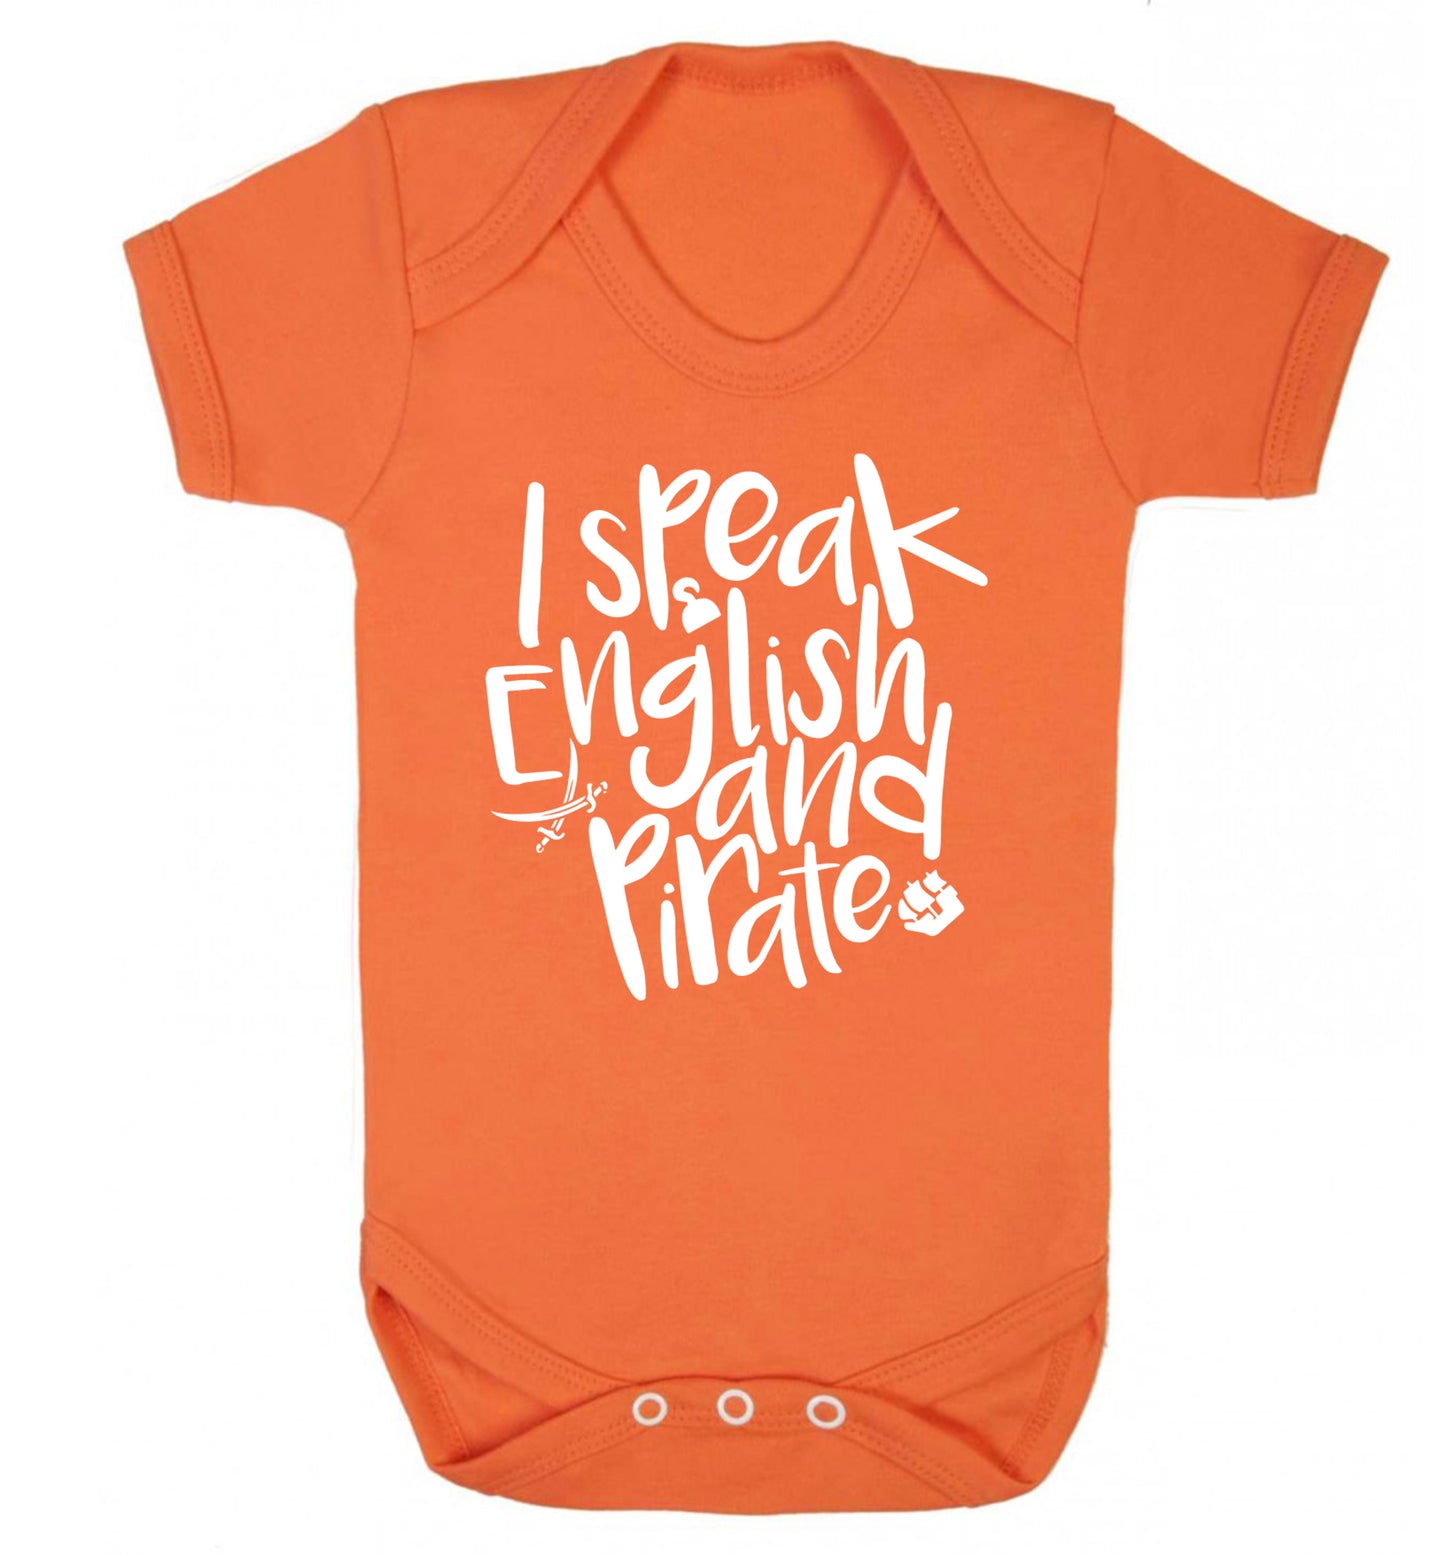 I speak English and pirate Baby Vest orange 18-24 months